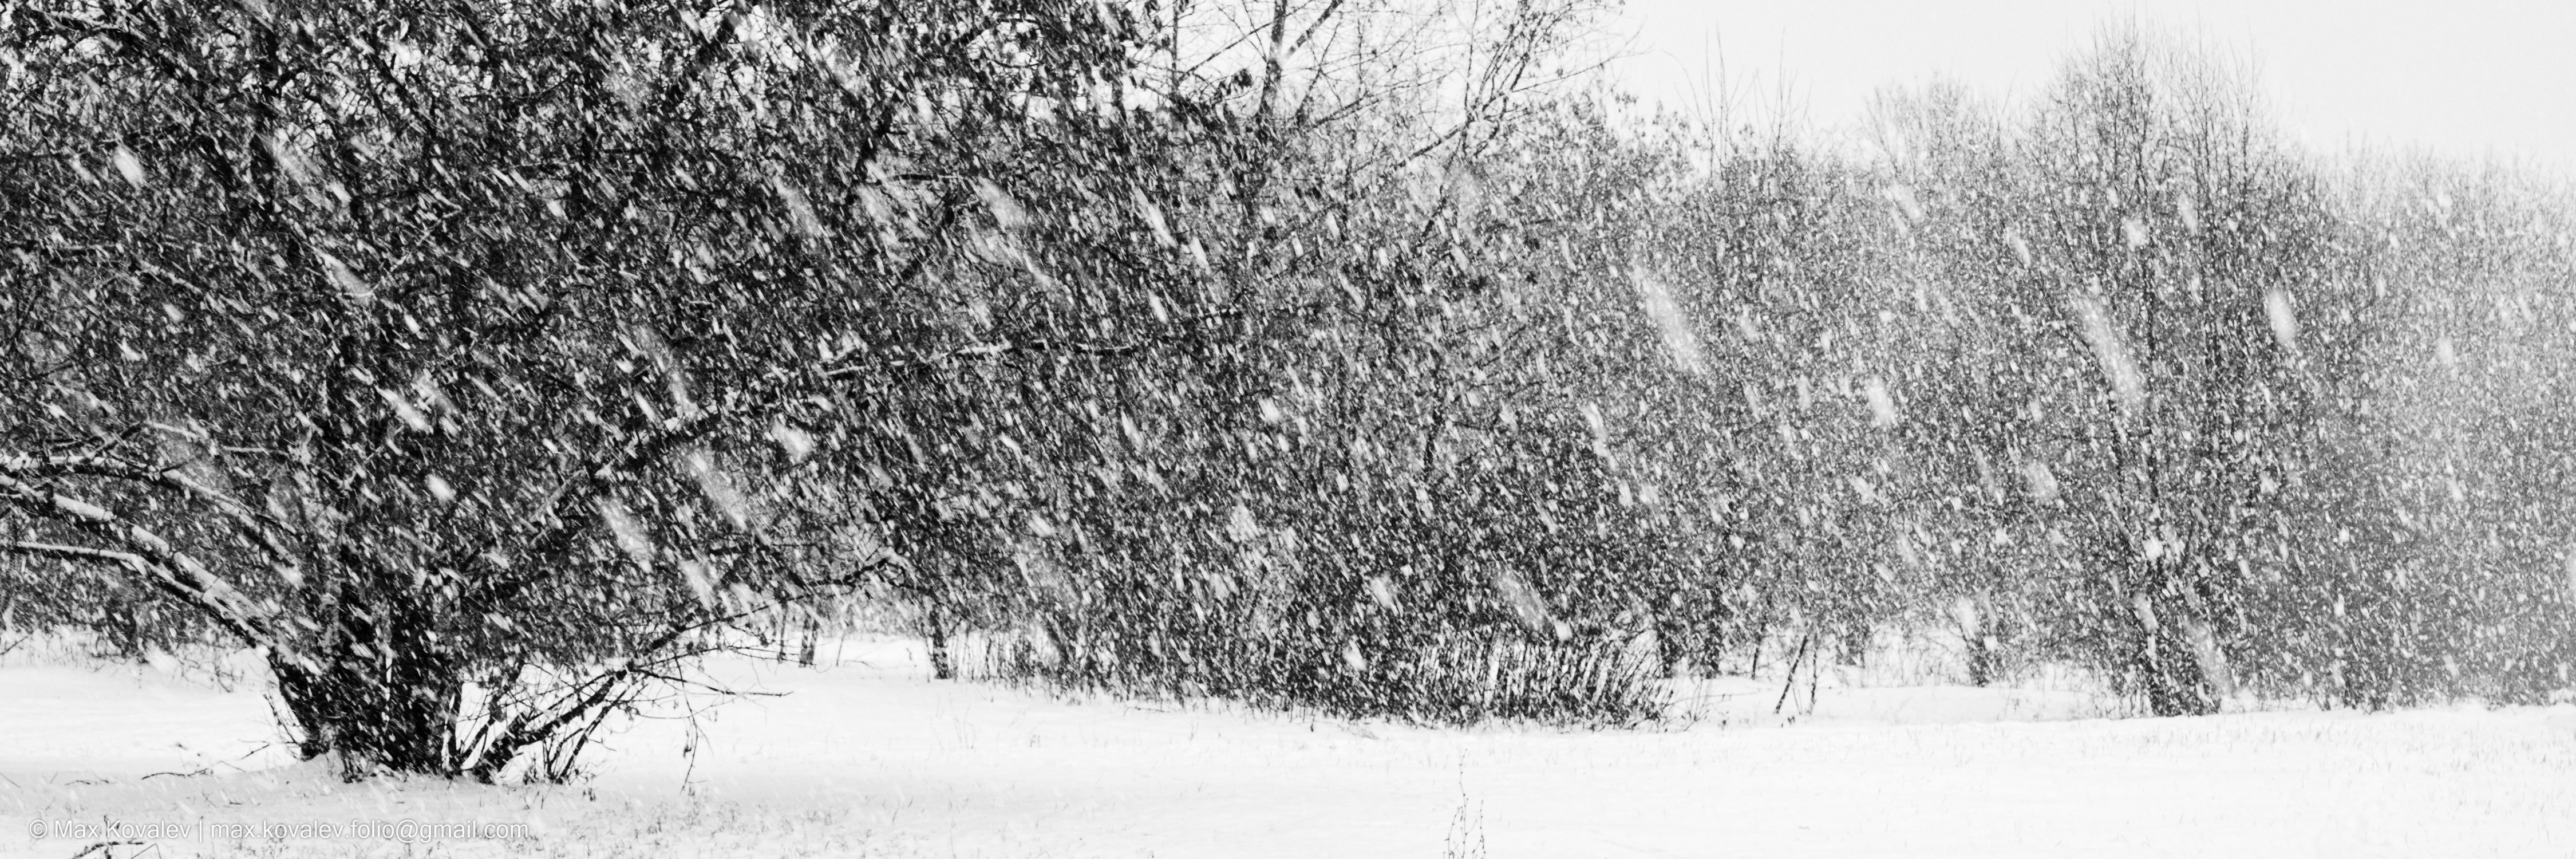 снег, снегопад, чёрно-белое, чб, ч/б, монохром, зима, природа, погода, Россия, weather, Russia, snow, snowfall, bw, monochrome, nature, Максим Ковалёв